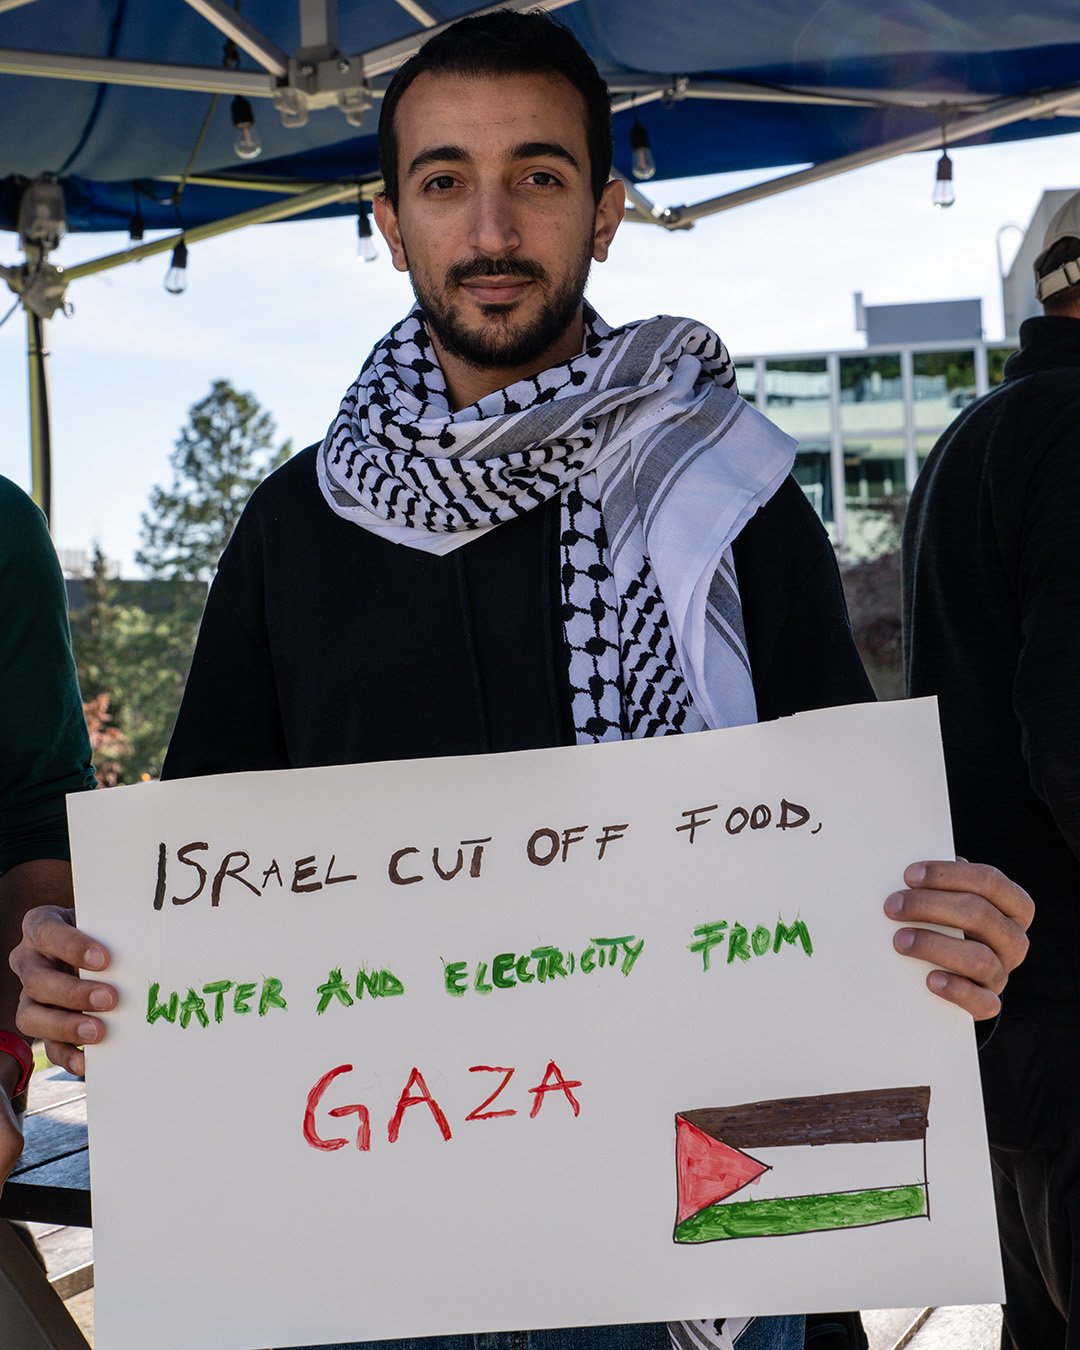 Israel cut off food to Gaza